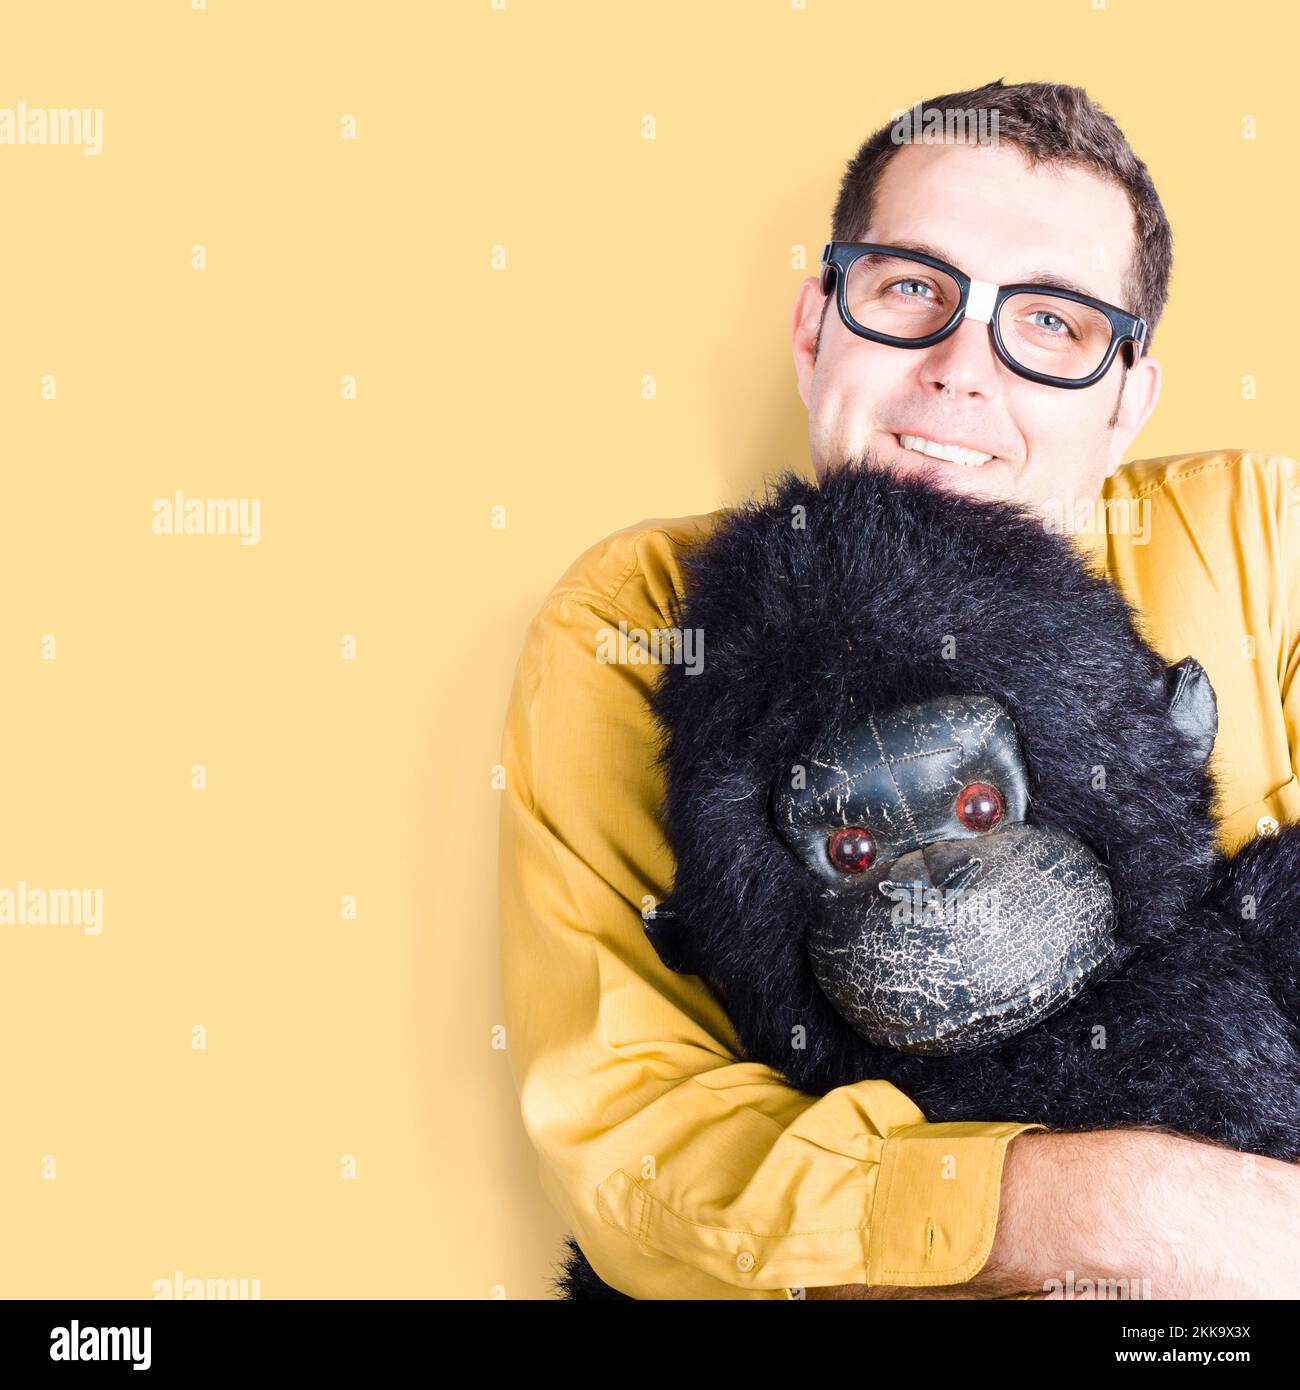 Big goofy man cuddling soft toy gorilla on yellow background. Comfort zone concept Stock Photo